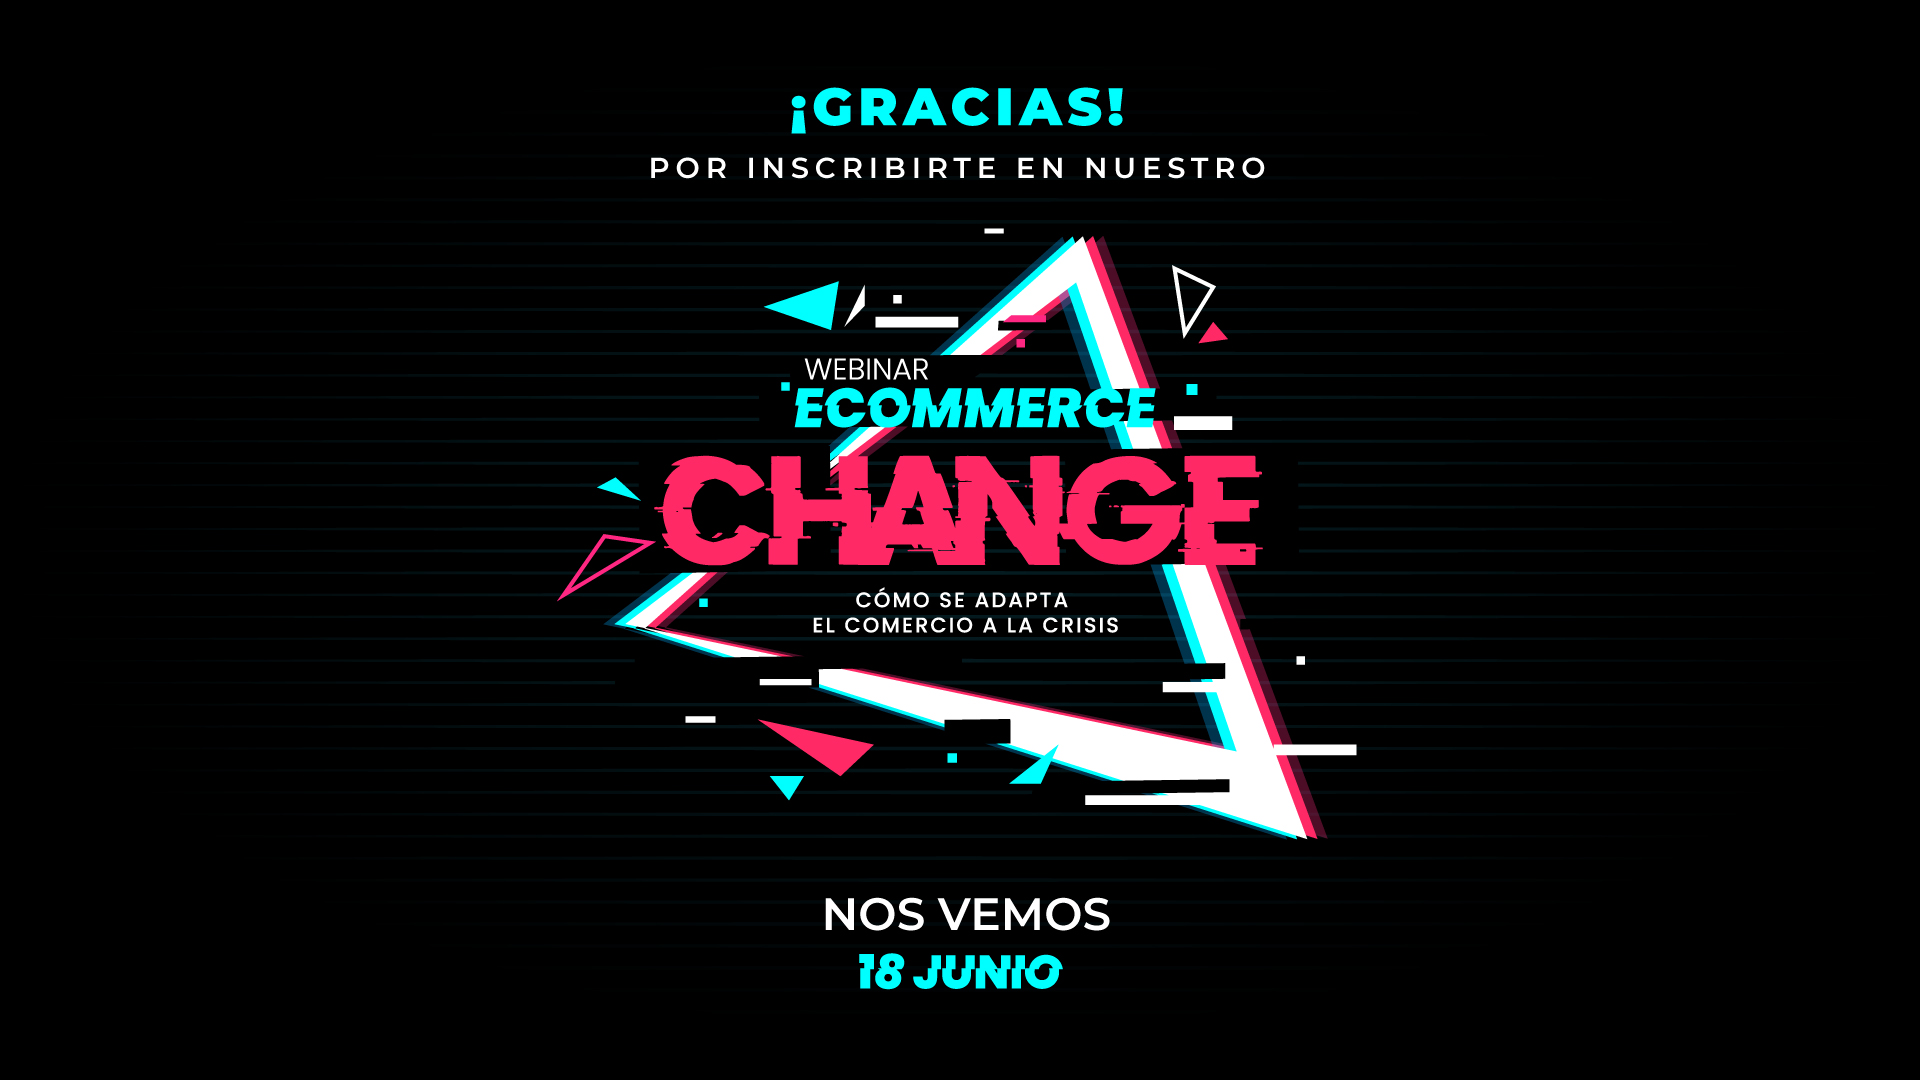 Webinar Gracias webinar ecommerce change